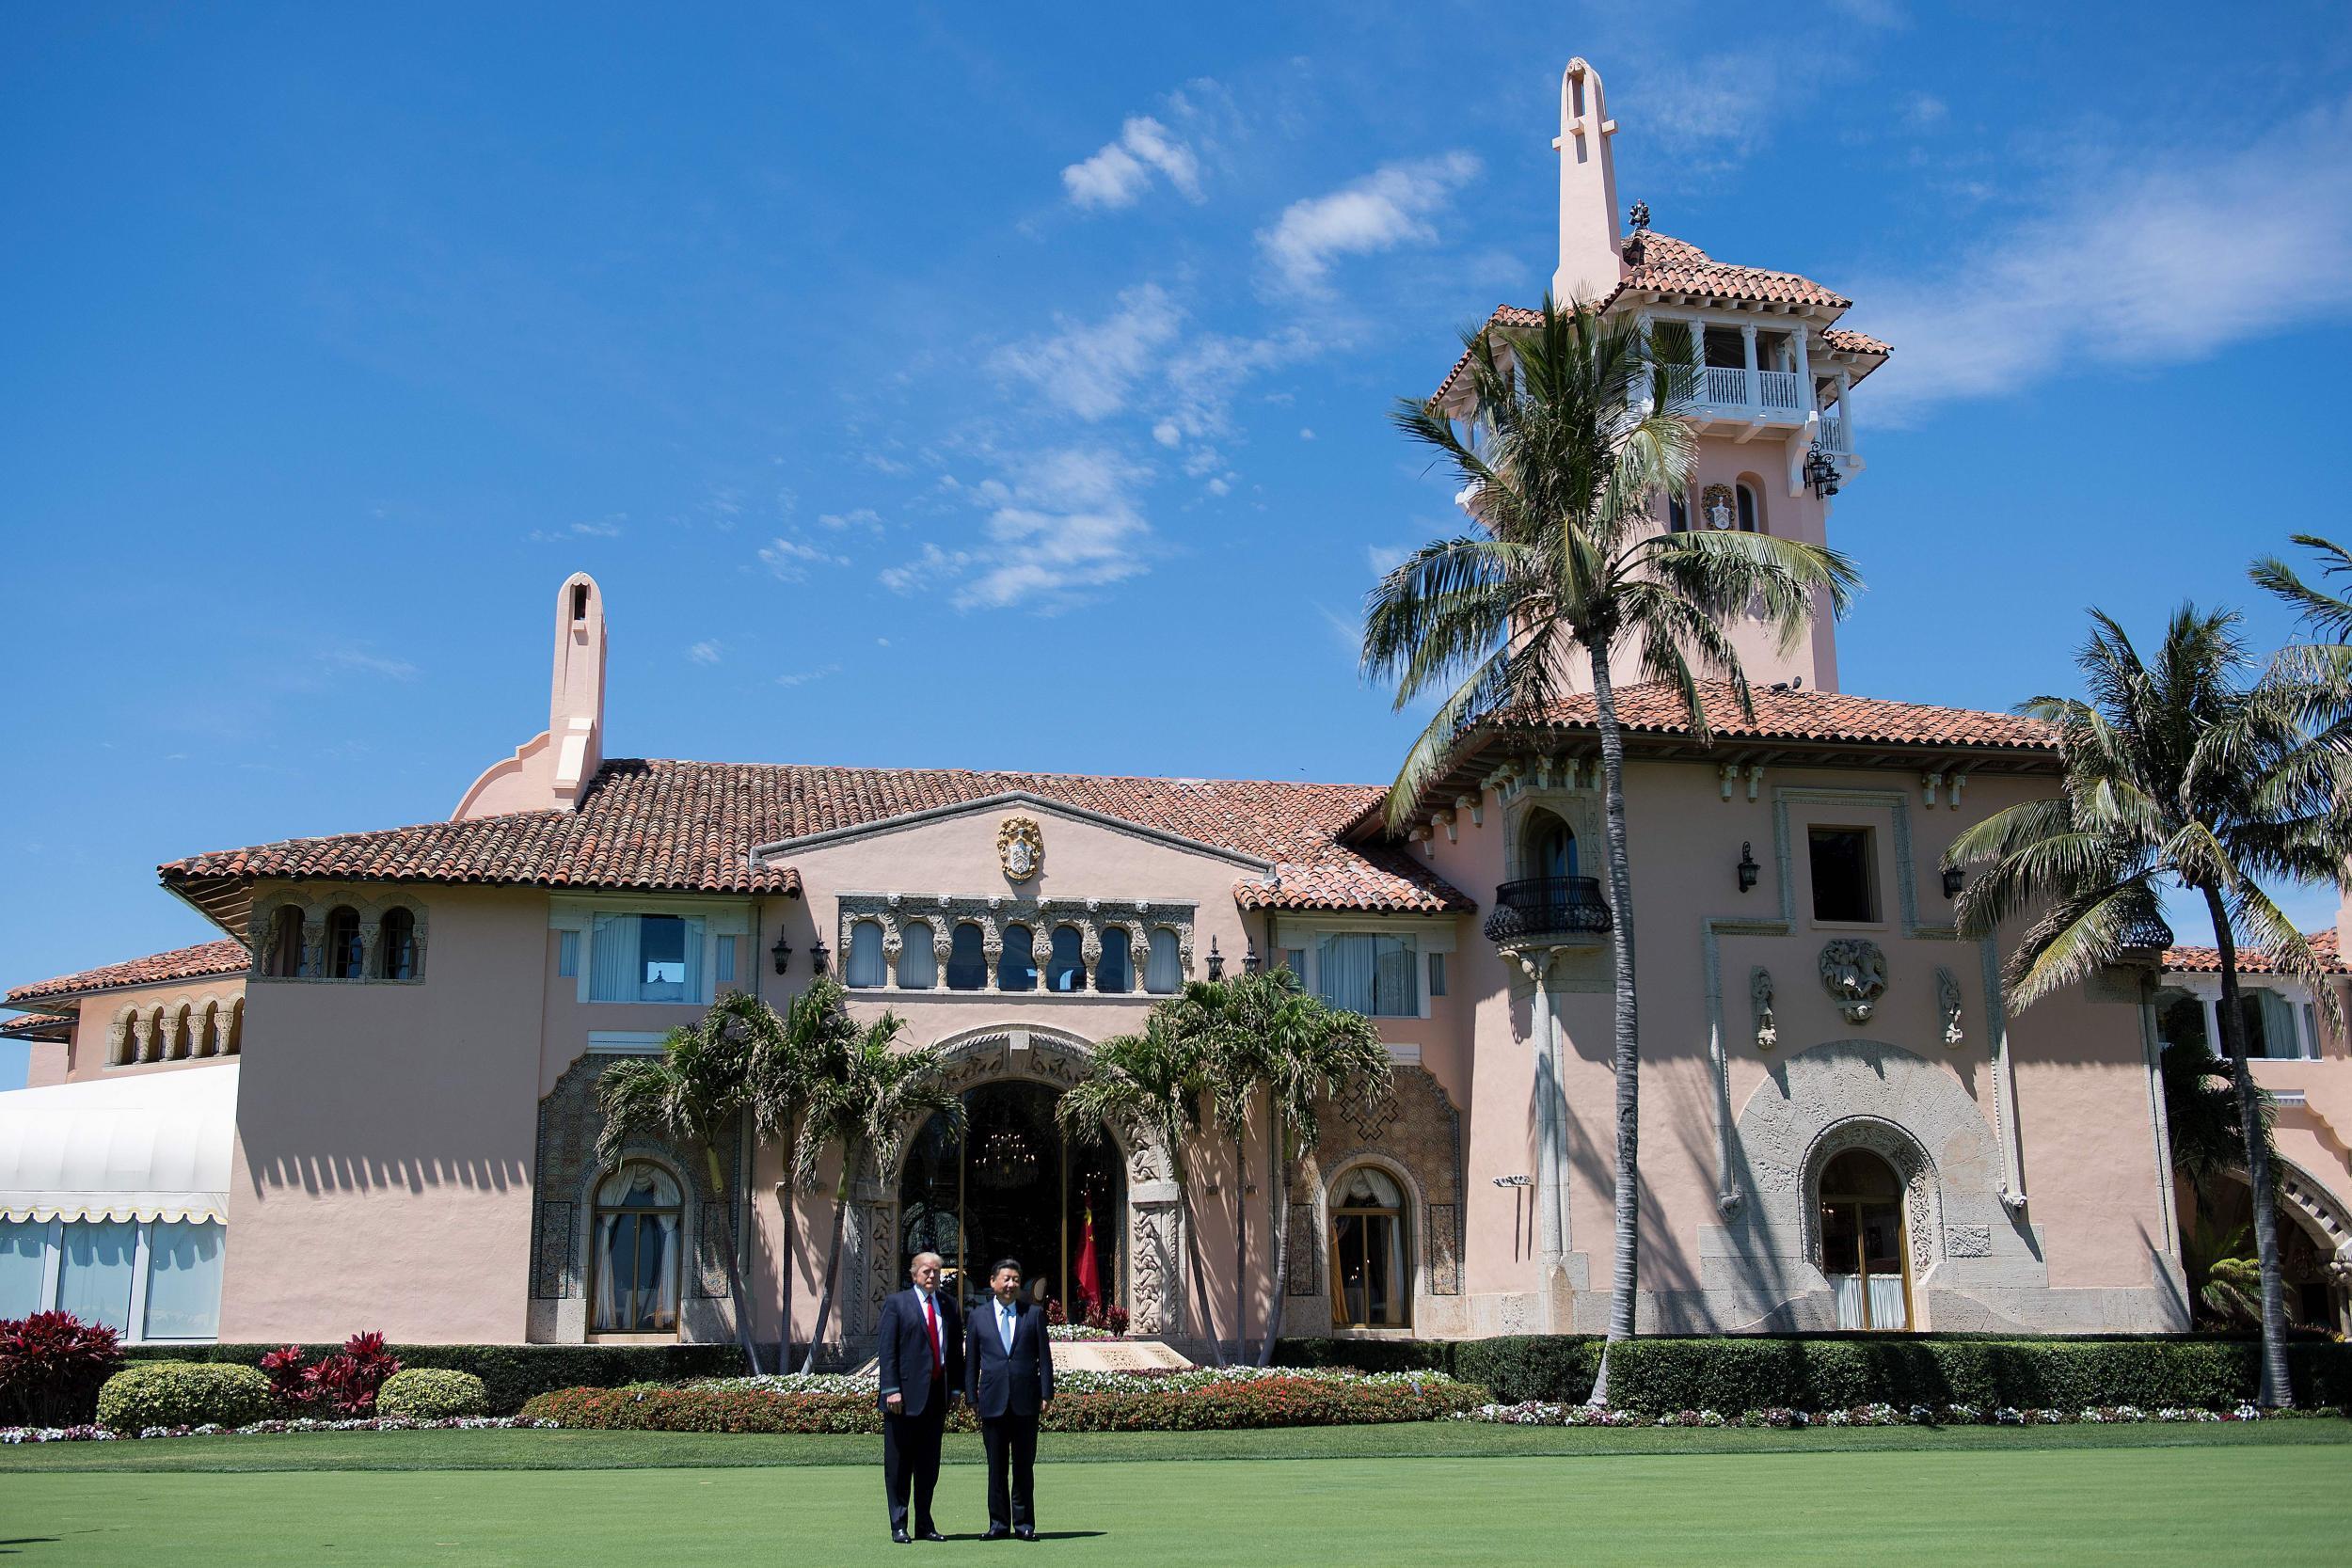 Donald Trump's Mar-a-lago estate in West Palm Beach, Florida